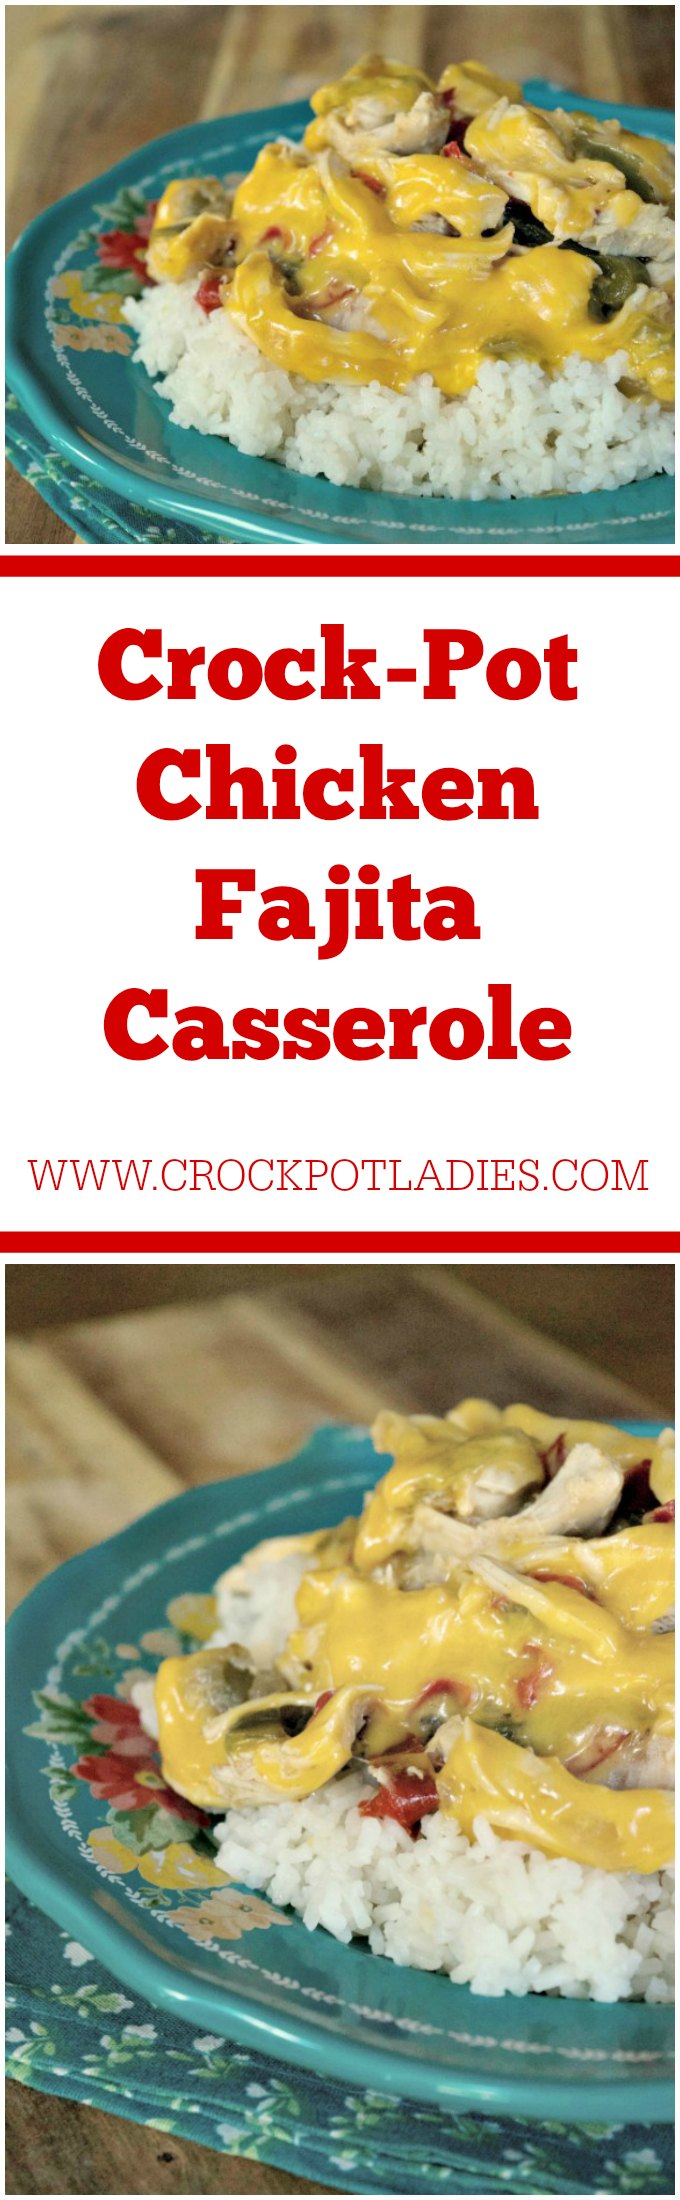 Crock-Pot Chicken Fajita Casserole